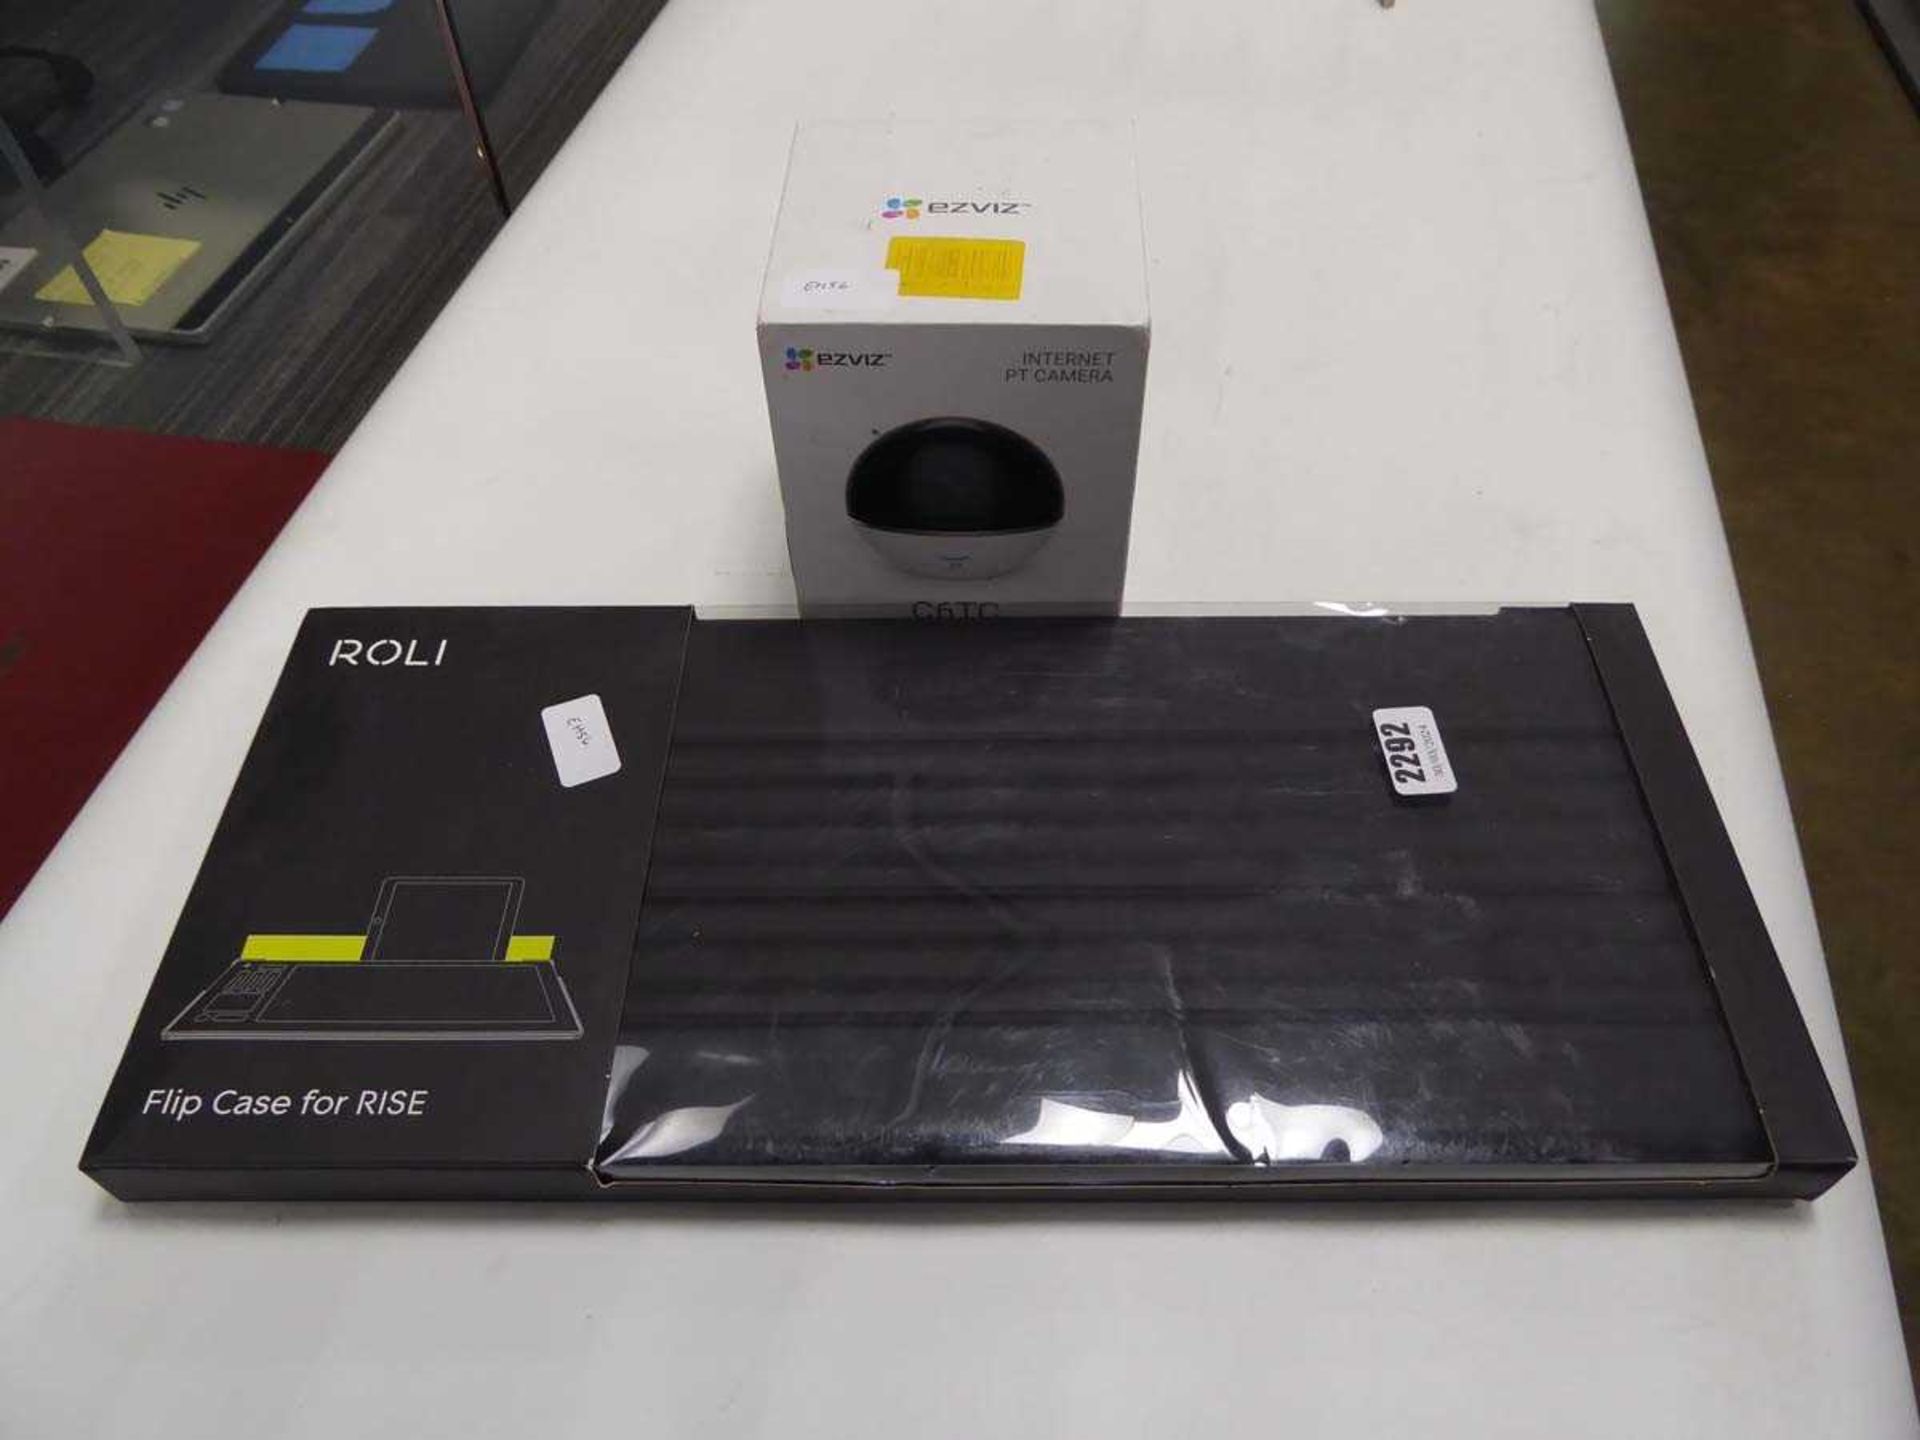 Ezviz C6TC internet PT camera and flip case for Rise